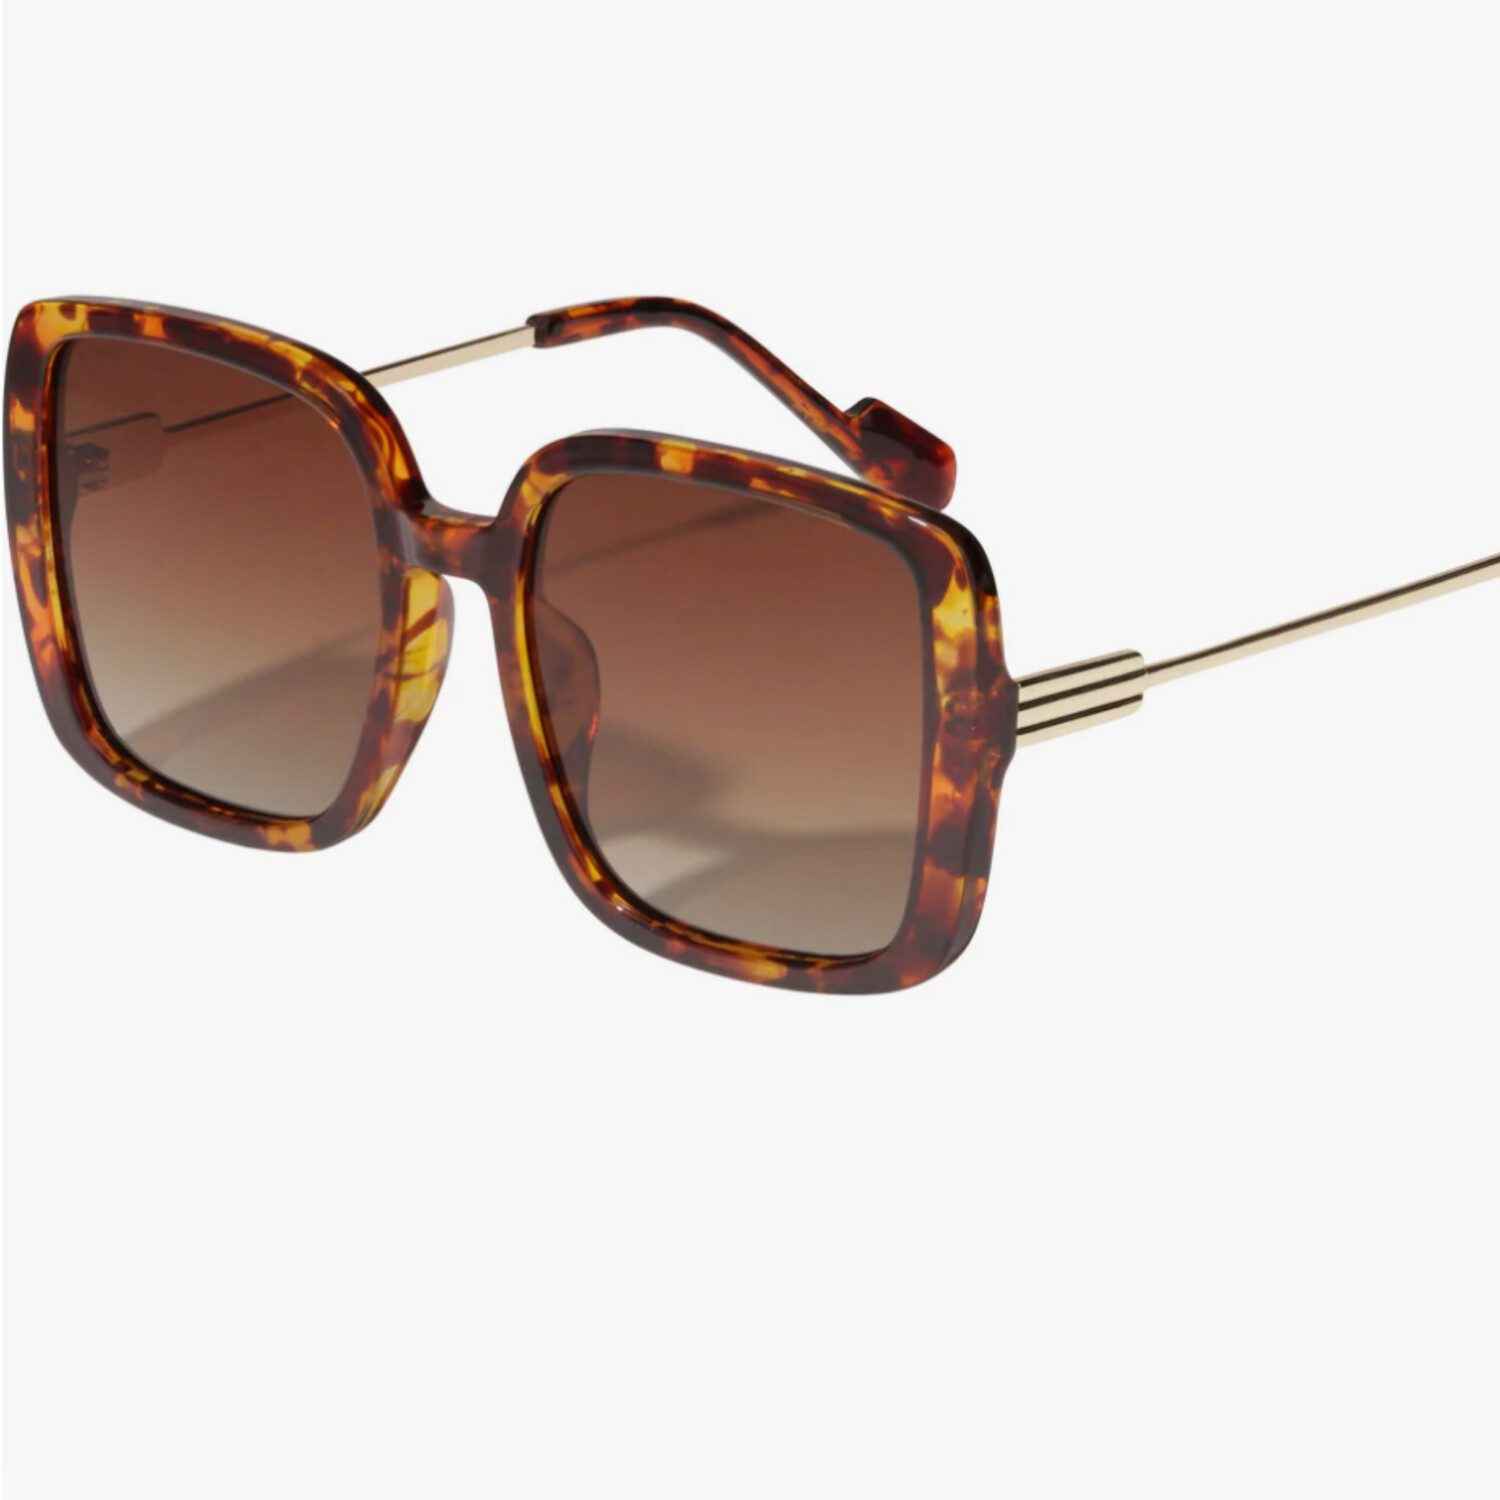 Aliet Brown Gold Sunglasses